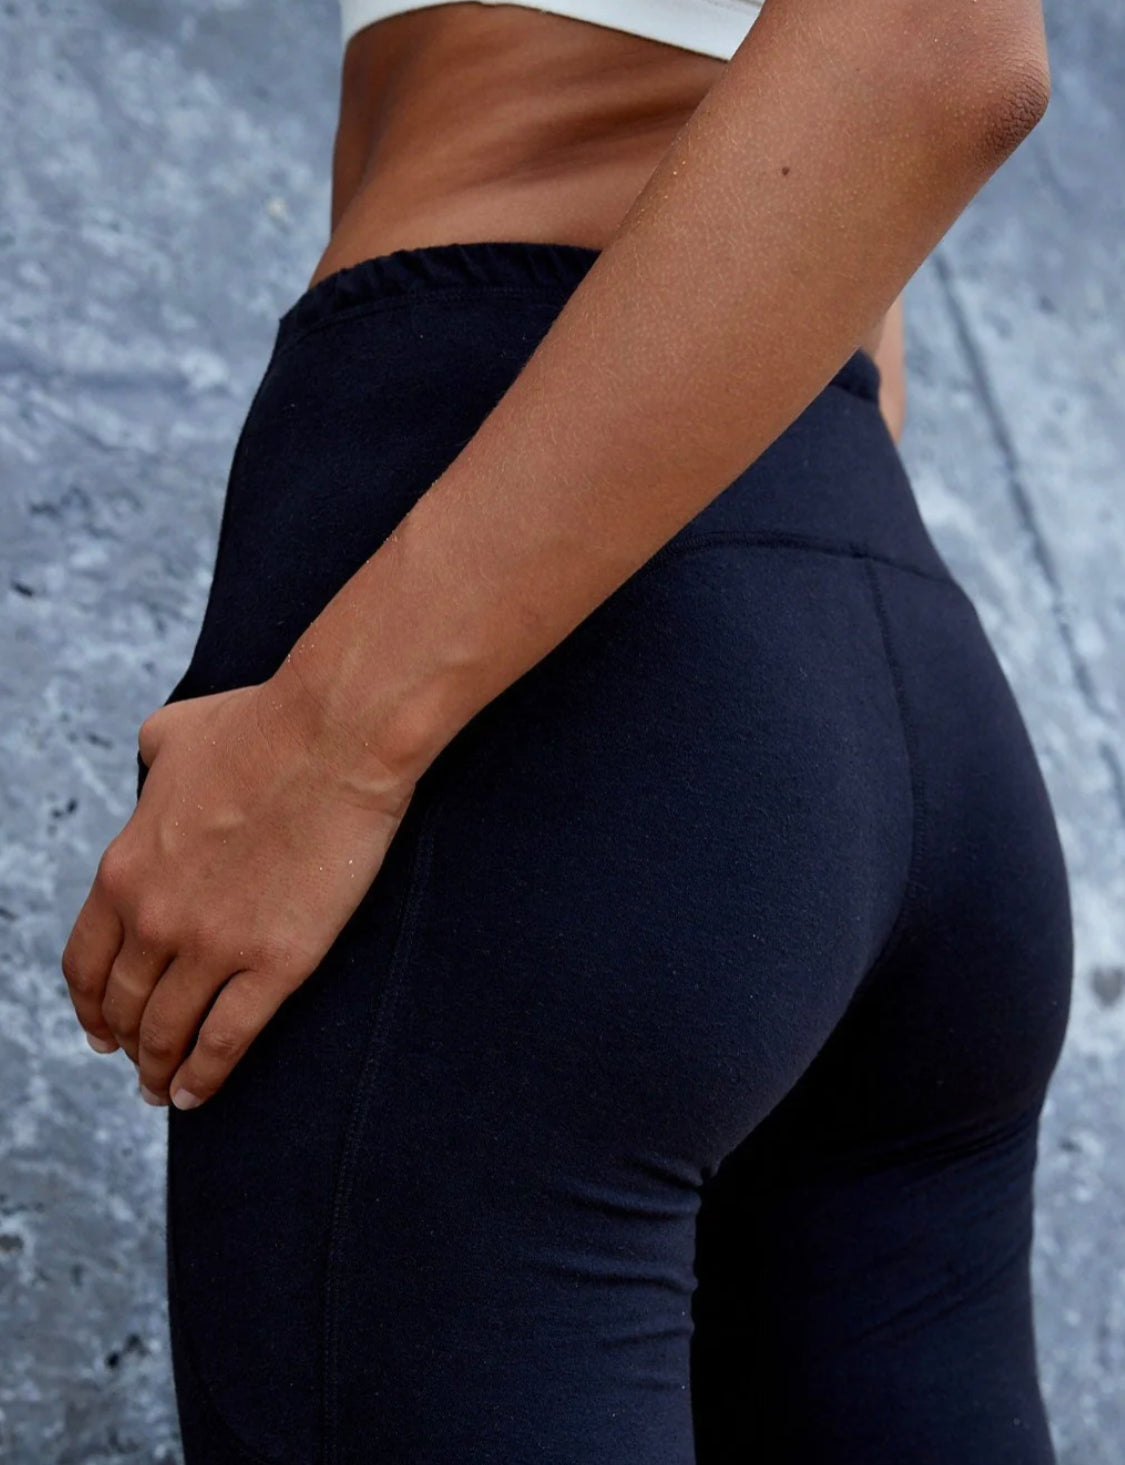 Men's Yoga Pants, Hemp, Cotton